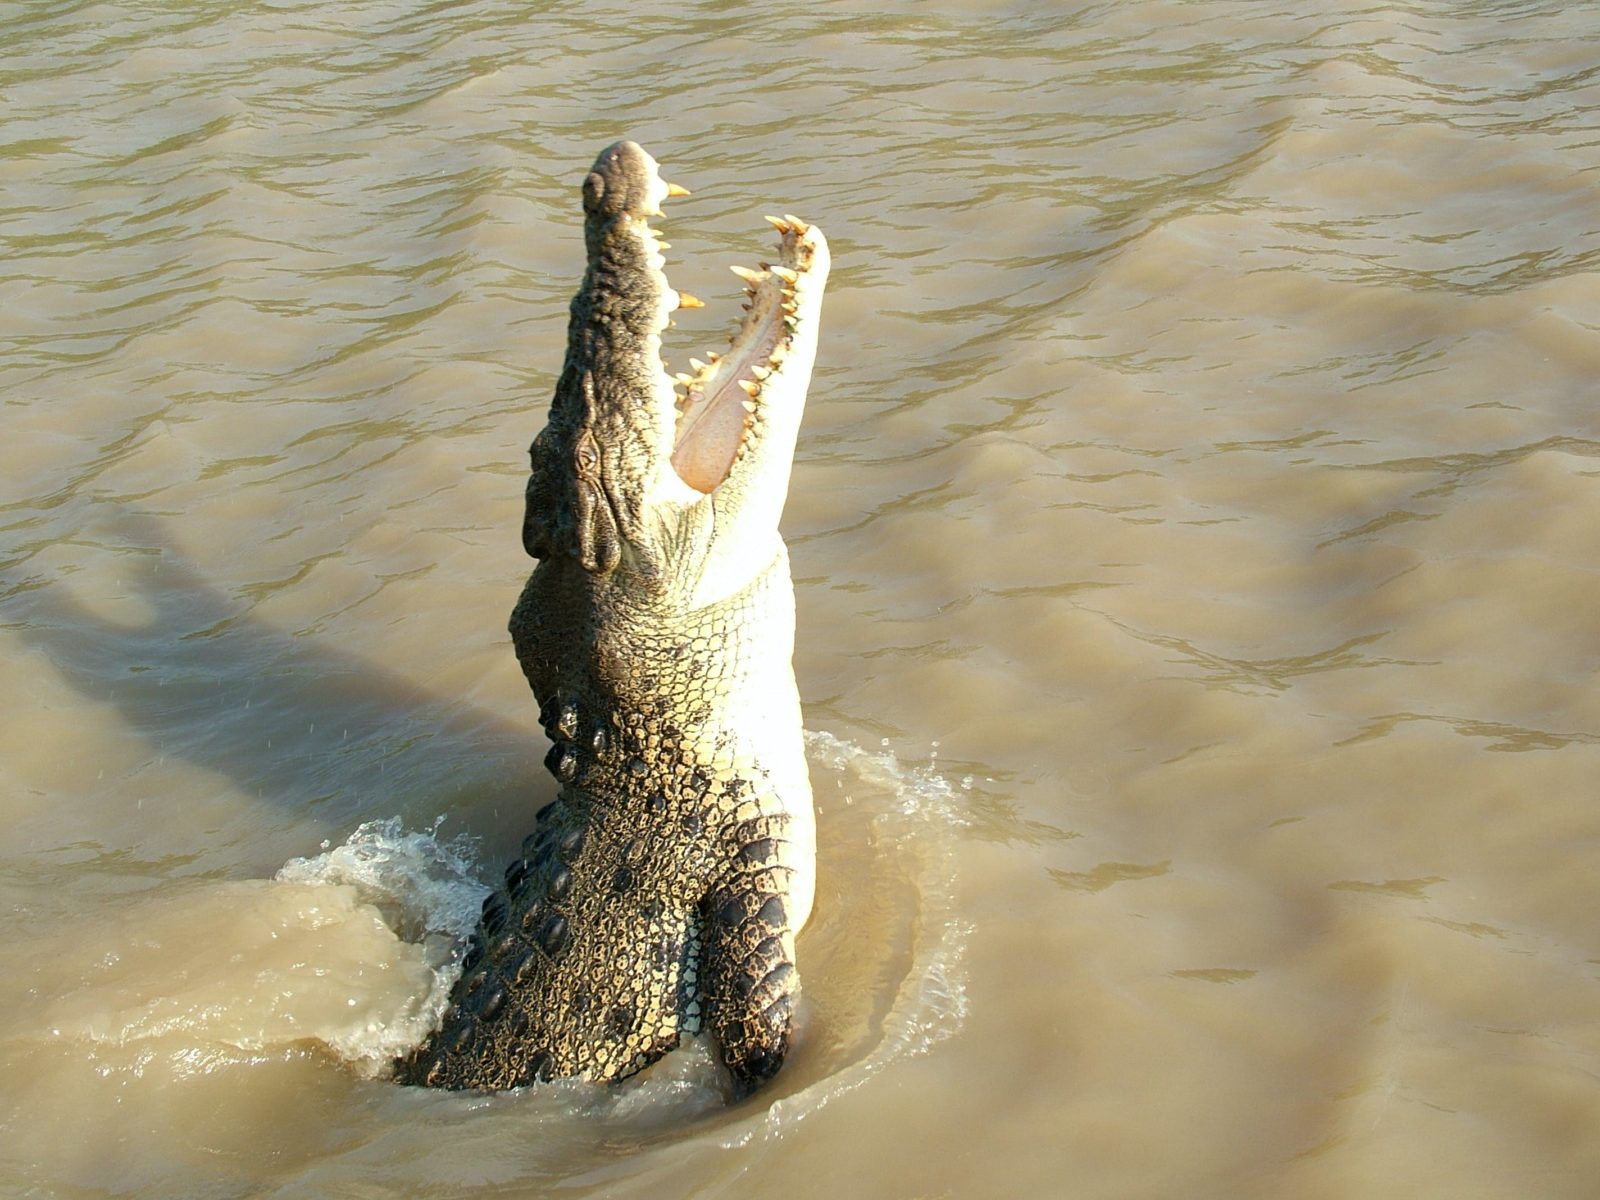 Adelaide River crocodile